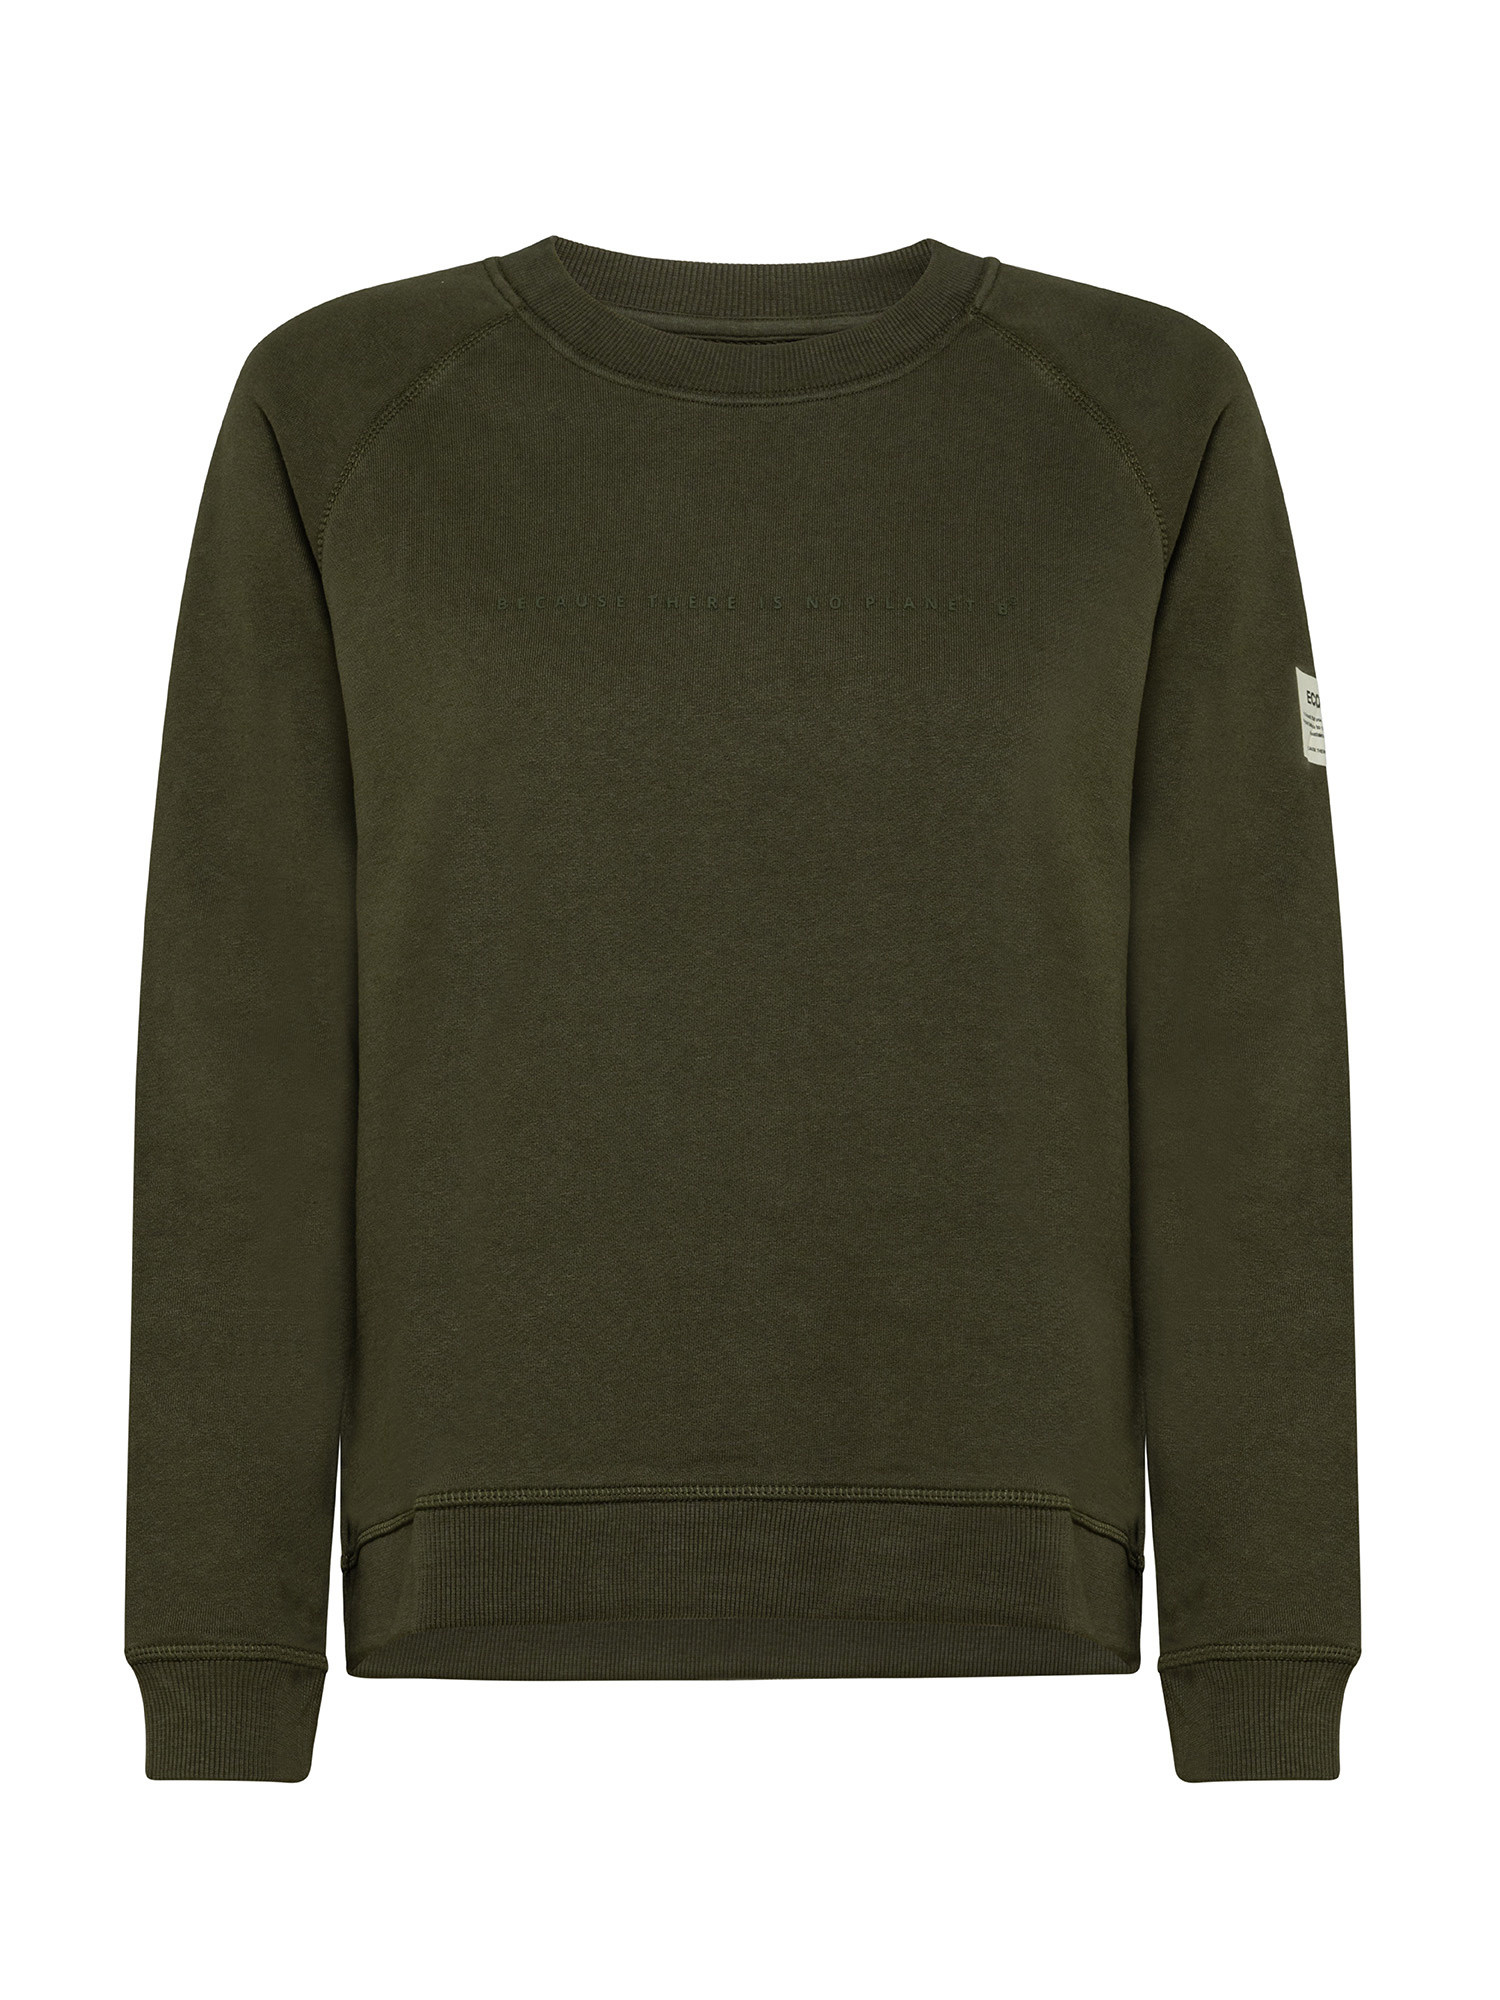 Ecoalf - Sirah sweatshirt with print, Dark Green, large image number 0